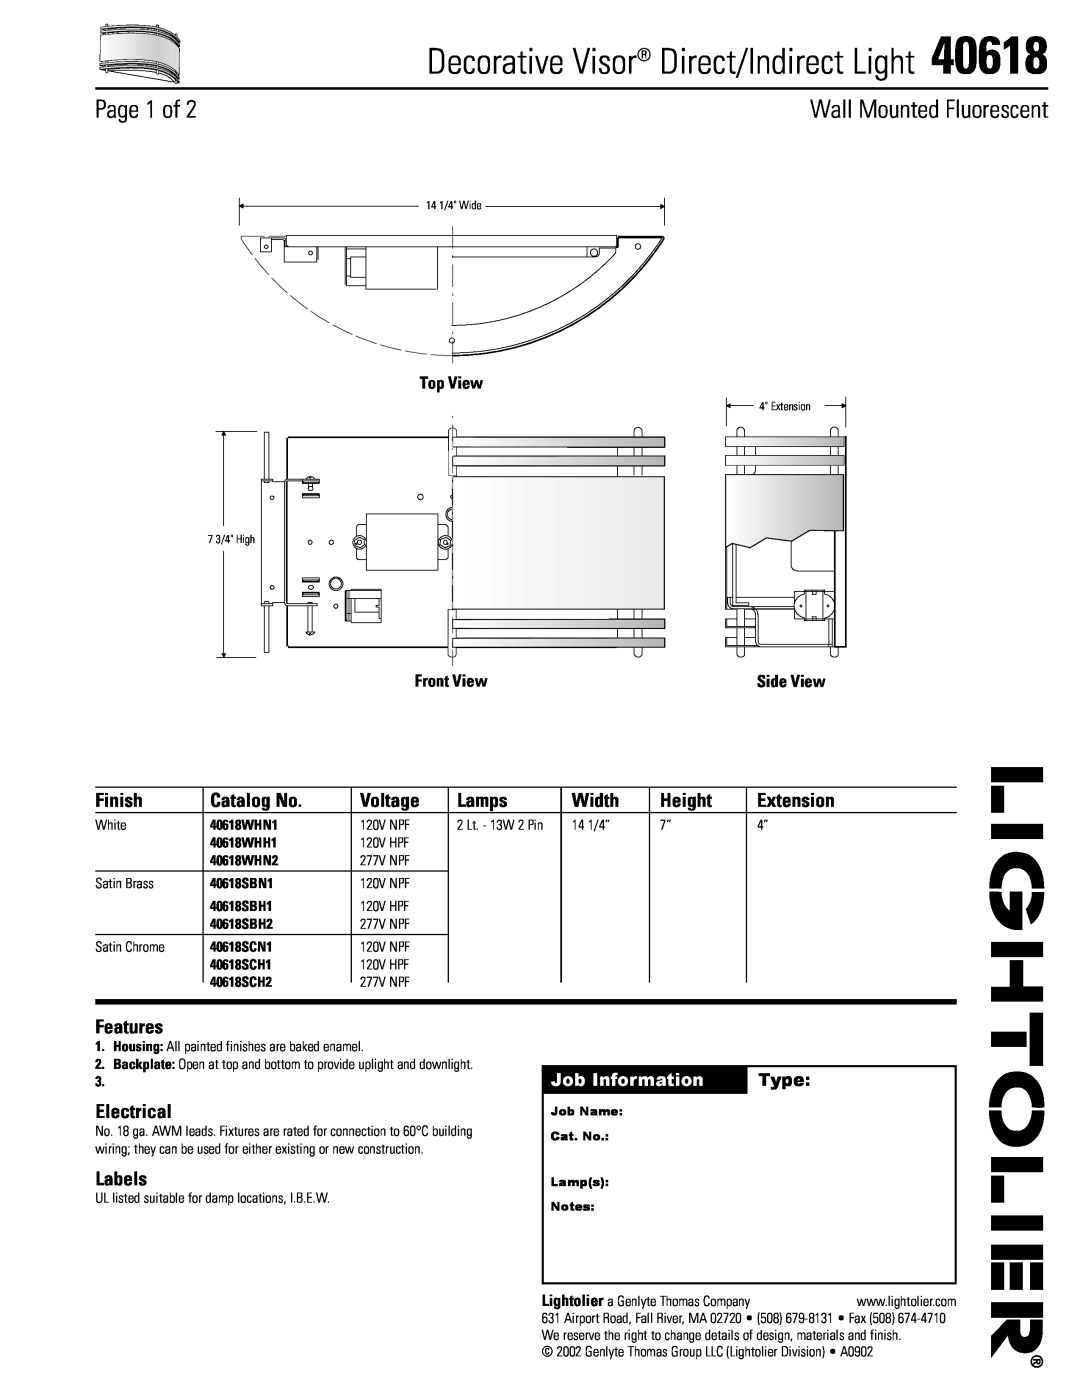 Lightolier 40618 manual Decorative Visor Direct/Indirect Light, Page 1 of, Wall Mounted Fluorescent, Finish, Catalog No 